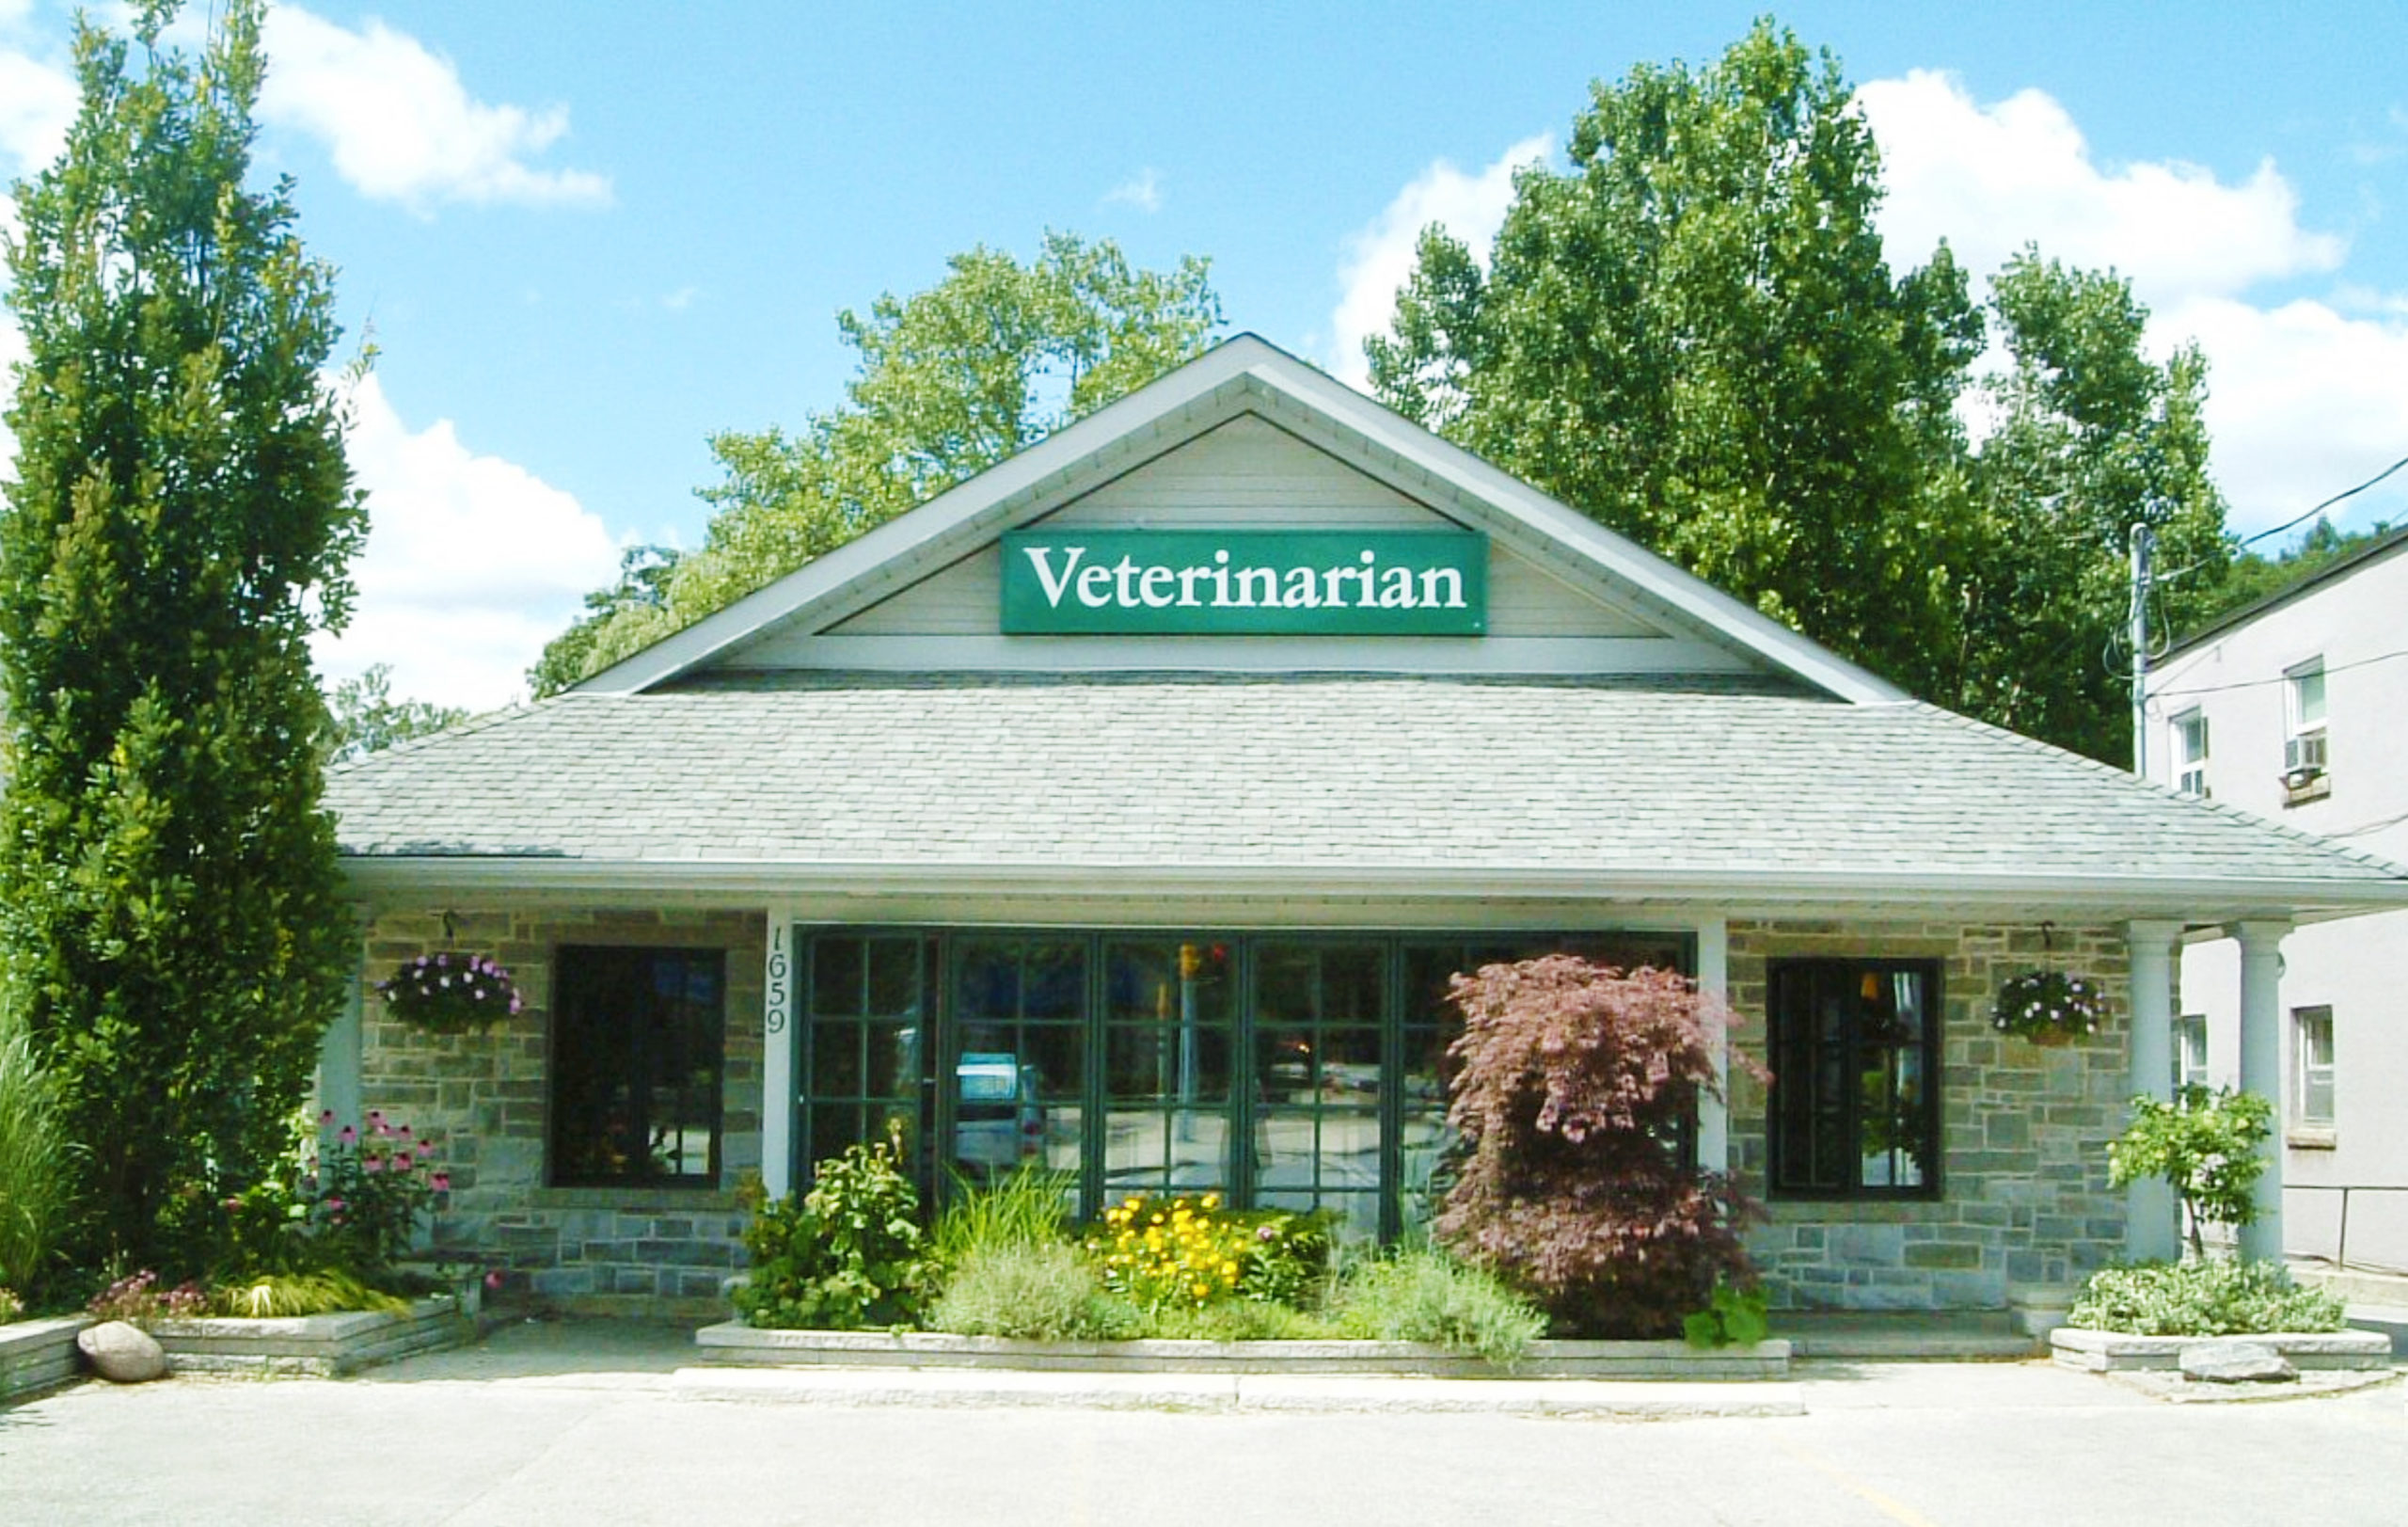 Clarkson Village Animal Hospital: Veterinarian in Mississauga, Ontario